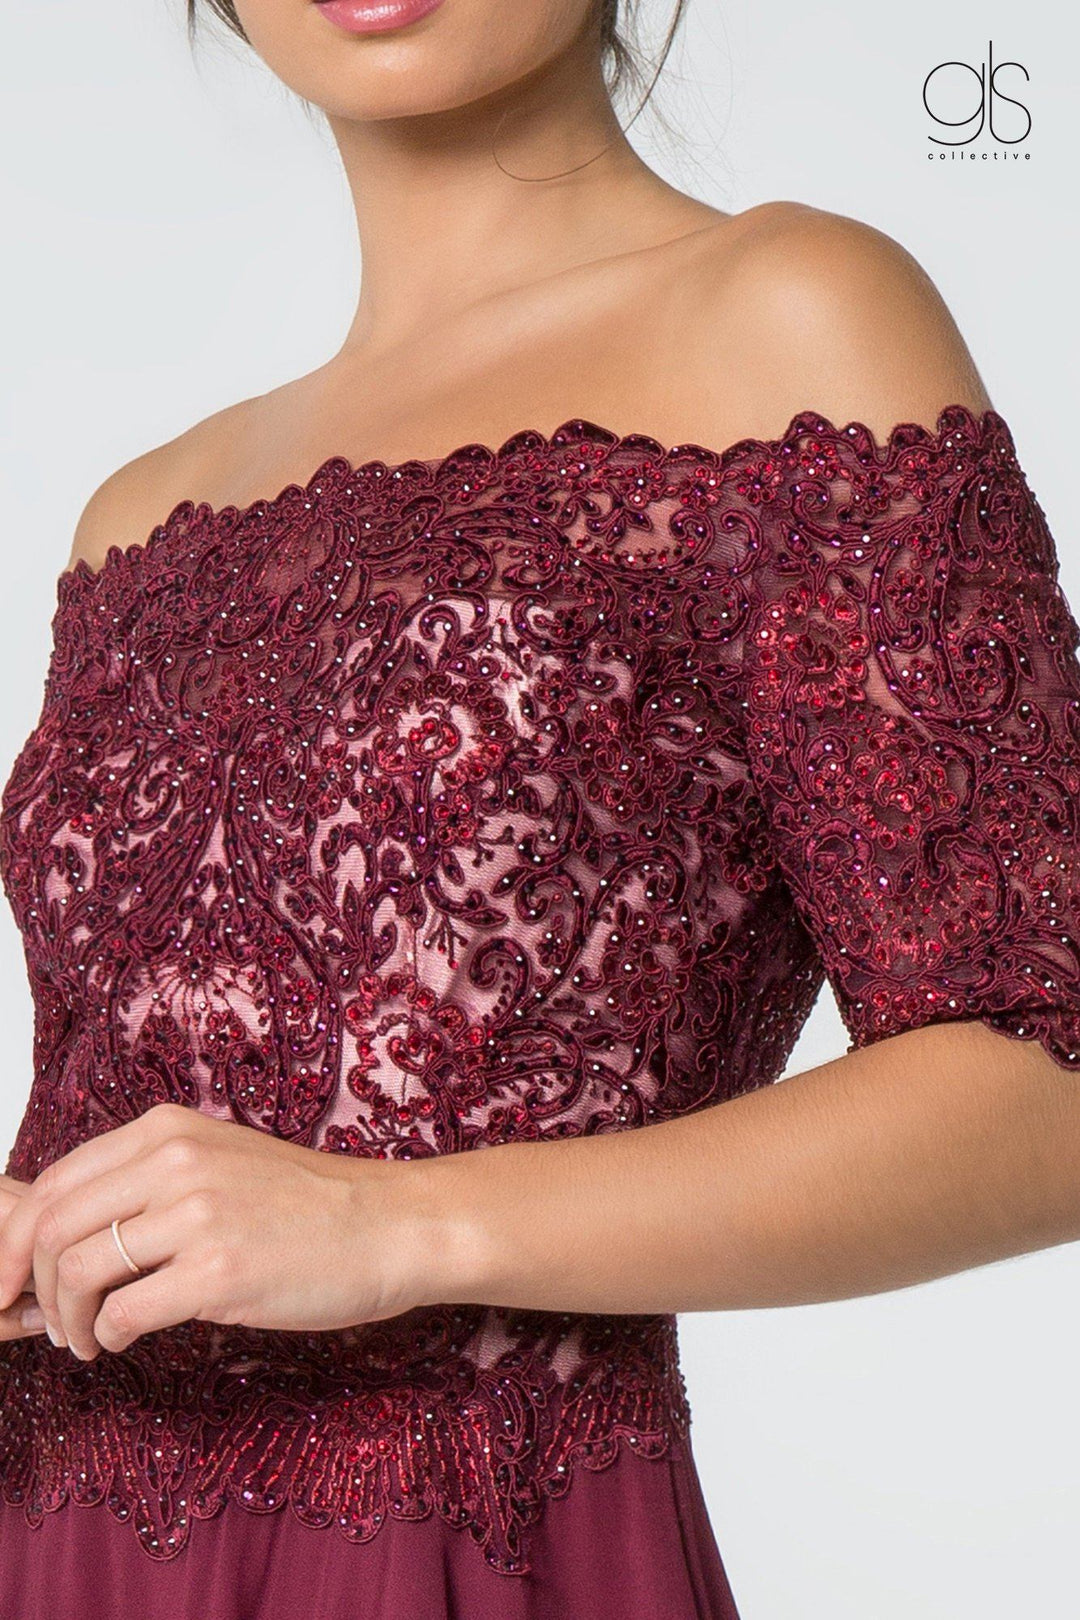 Long Off Shoulder Dress with Embroidered Bodice by Elizabeth K GL2525-Long Formal Dresses-ABC Fashion